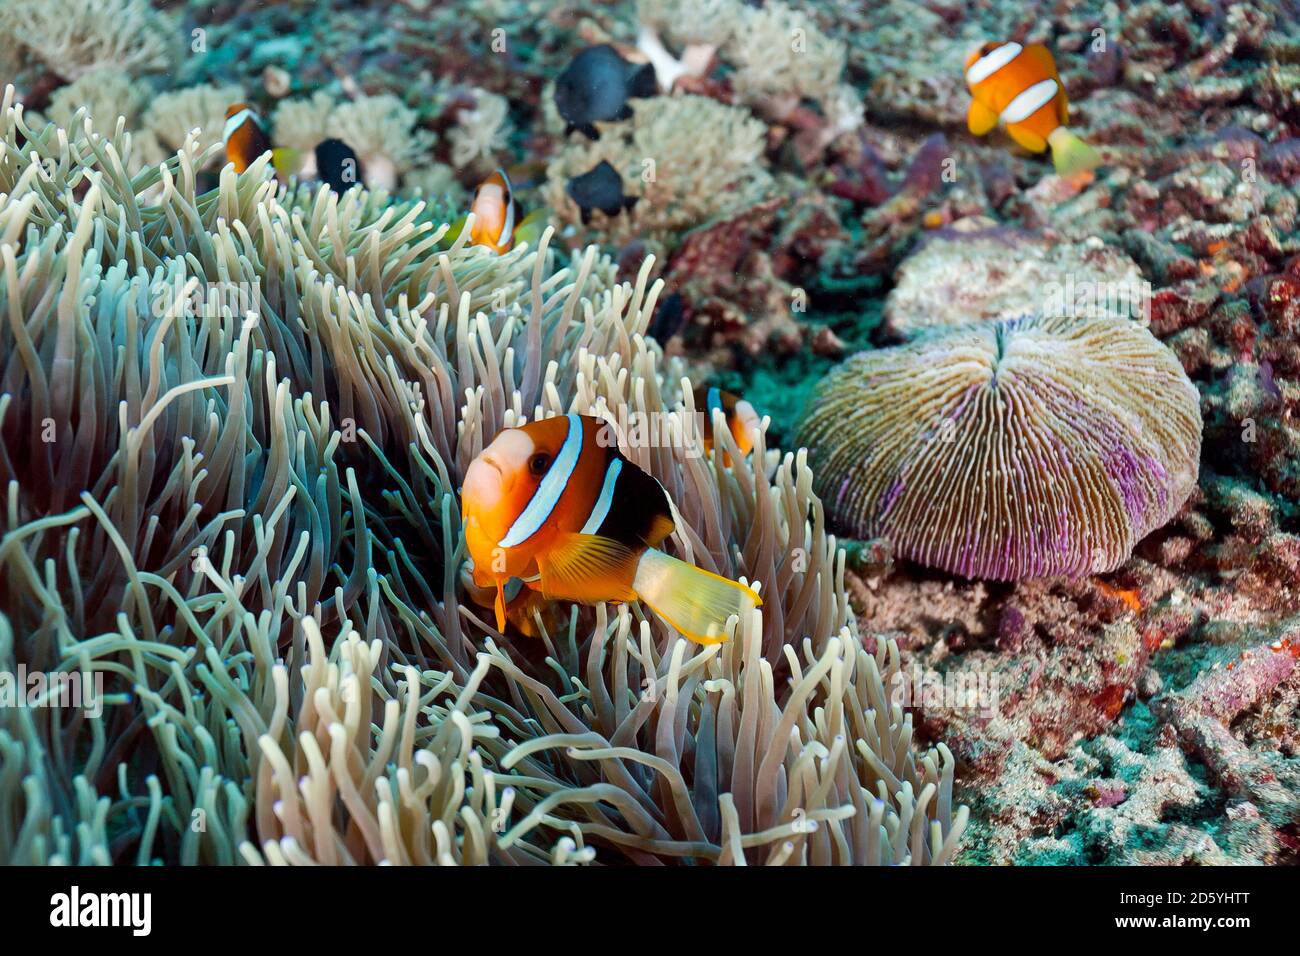 Indonesia, Bali, Nusa Lembongan, Clark's anemonefish, Amphiprion clarkii Stock Photo